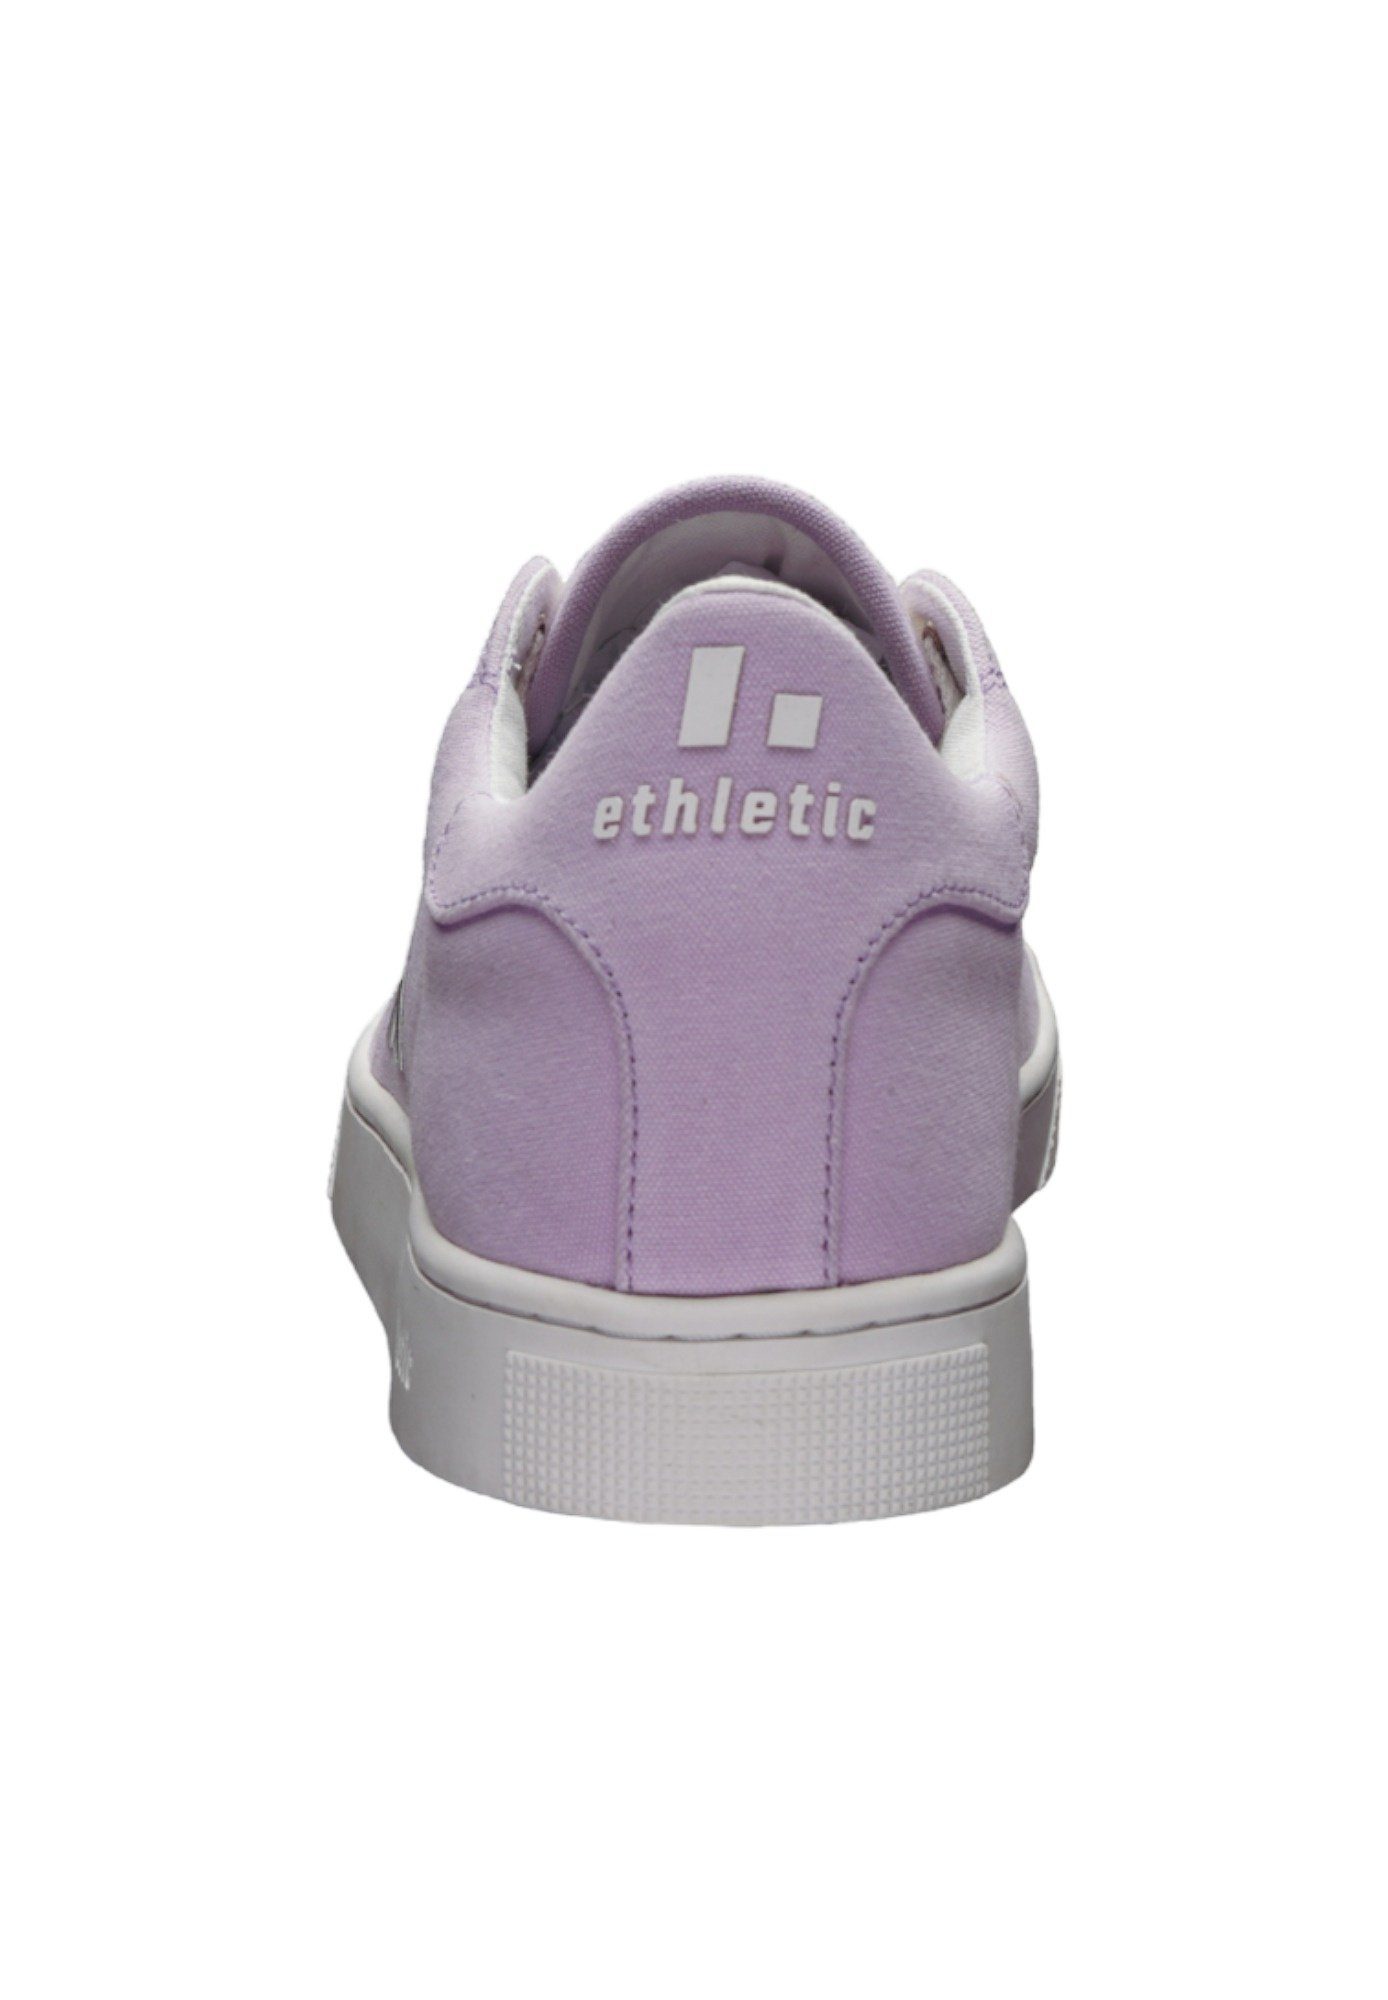 ETHLETIC Lavender Sneaker Pink White Cut Just Produkt Active Fairtrade Lo -